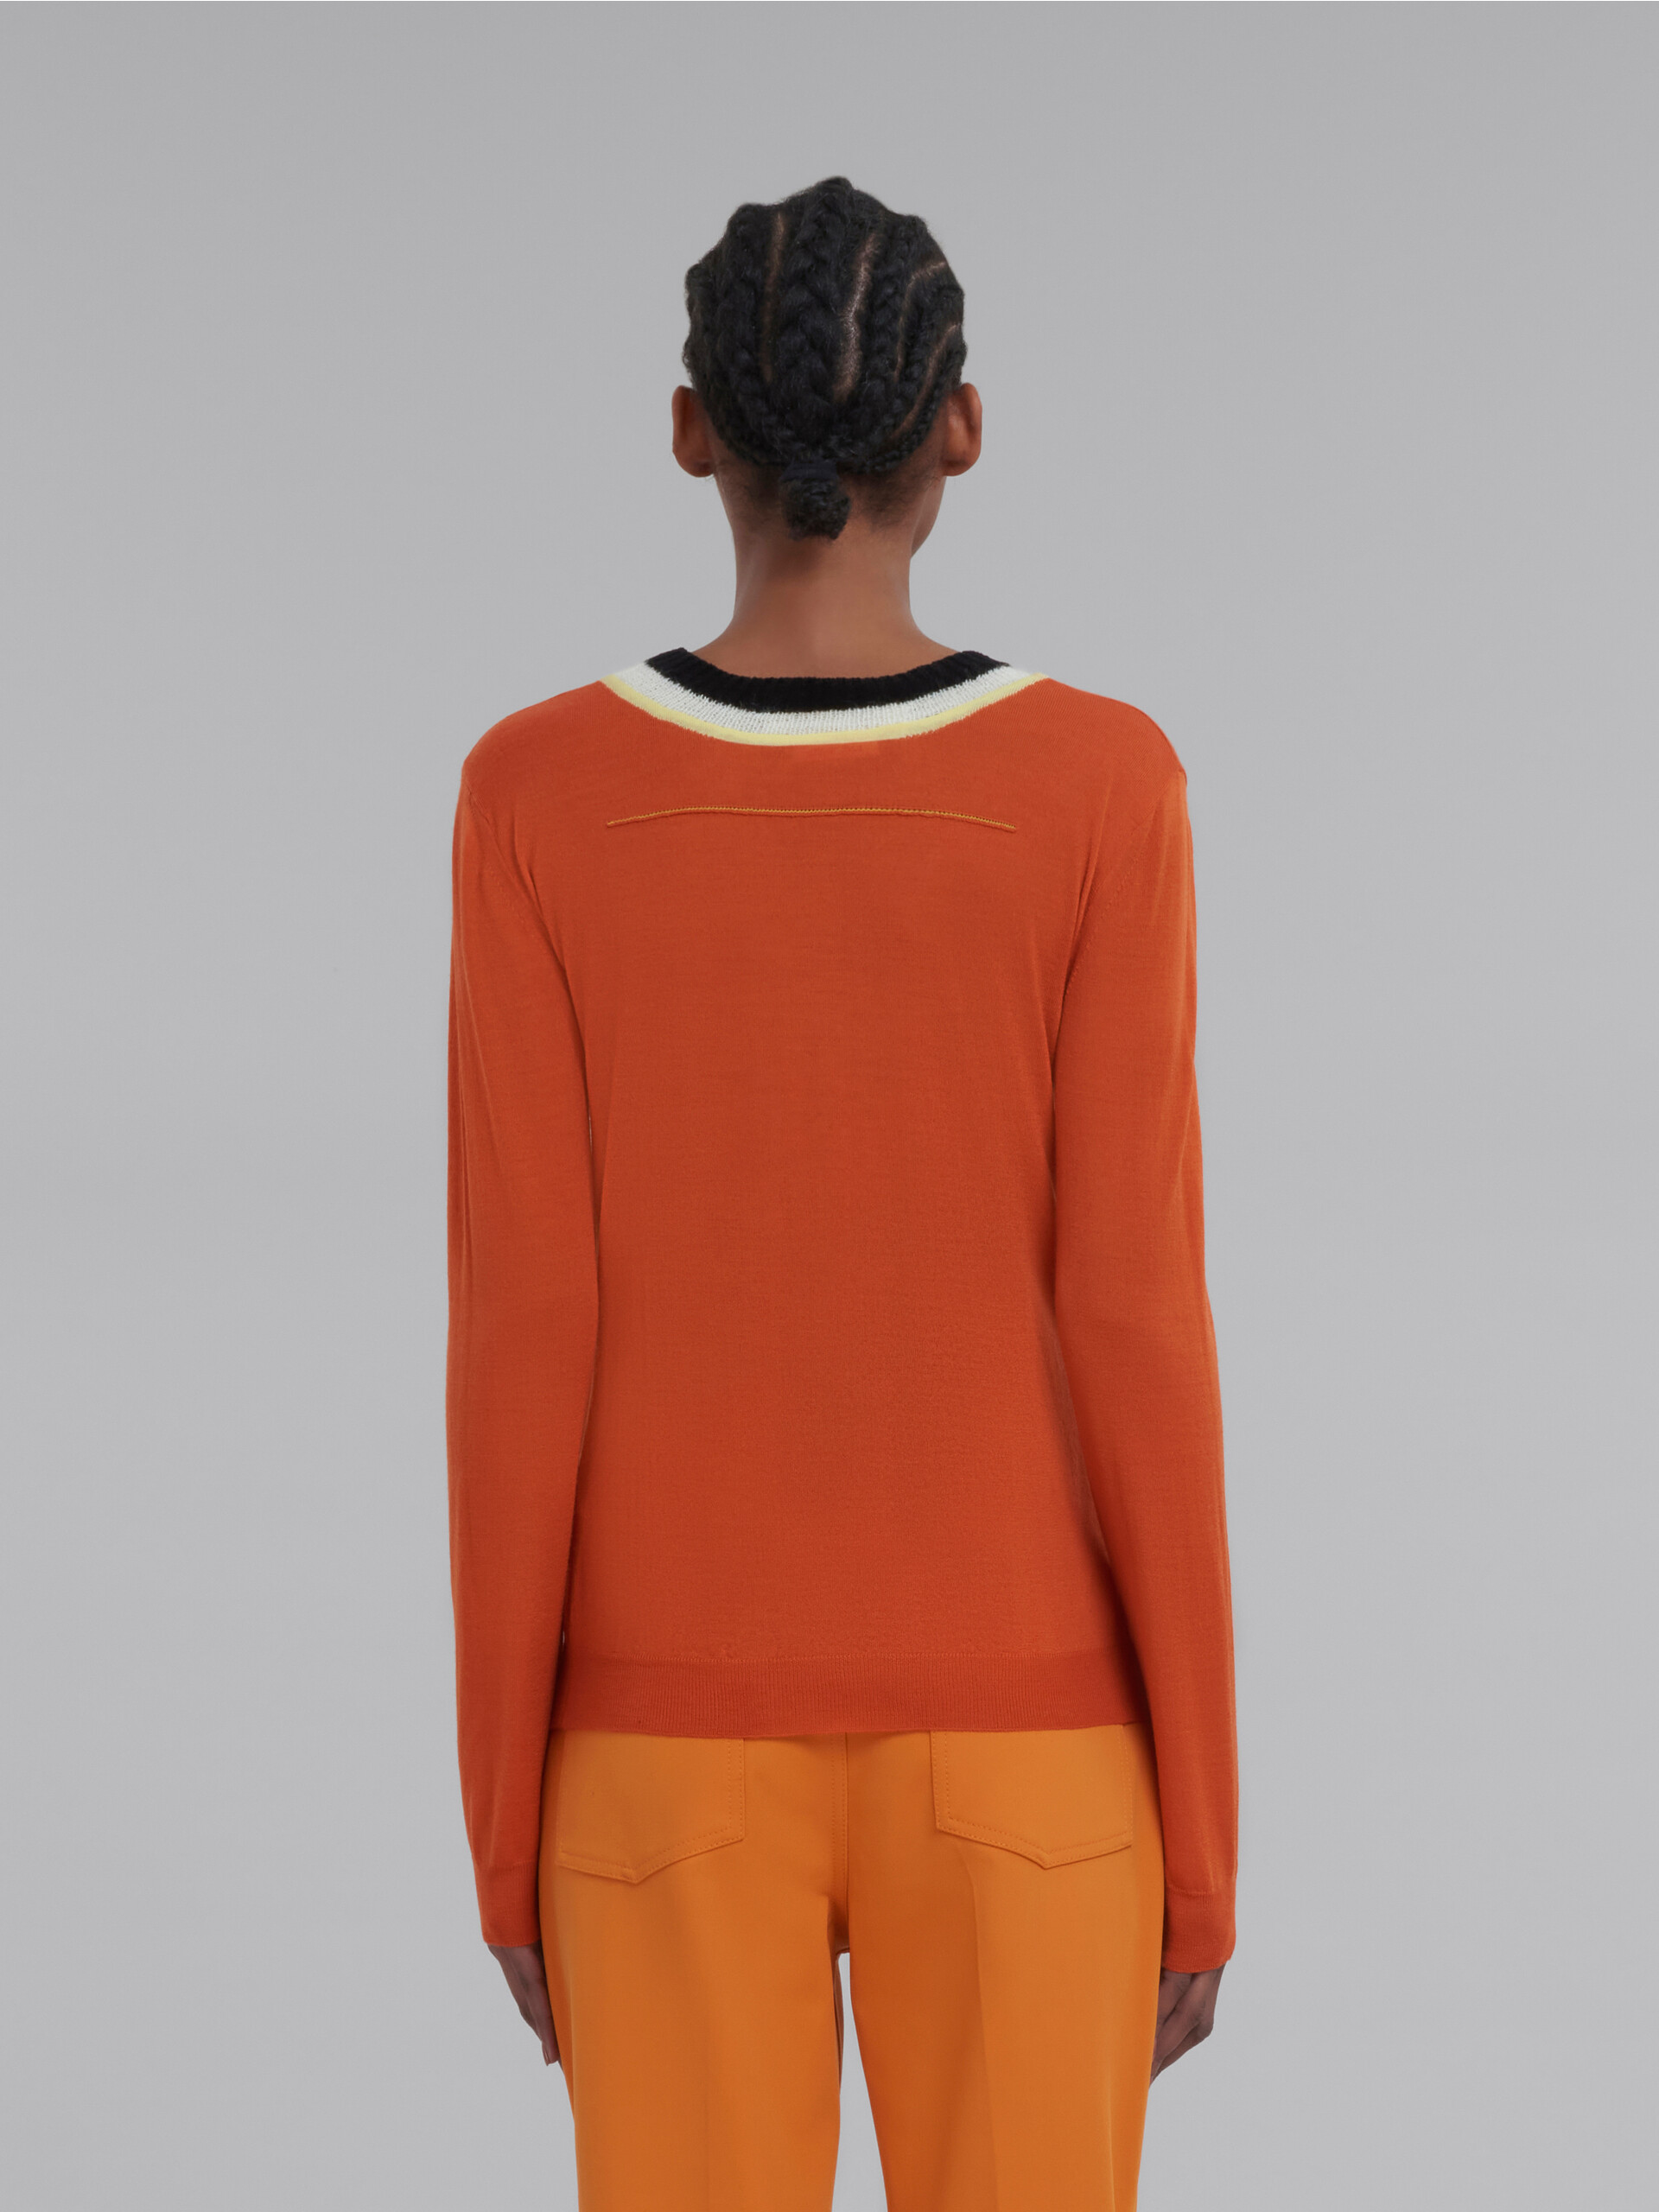 Orange wool jumper with triple neckline - Pullovers - Image 3